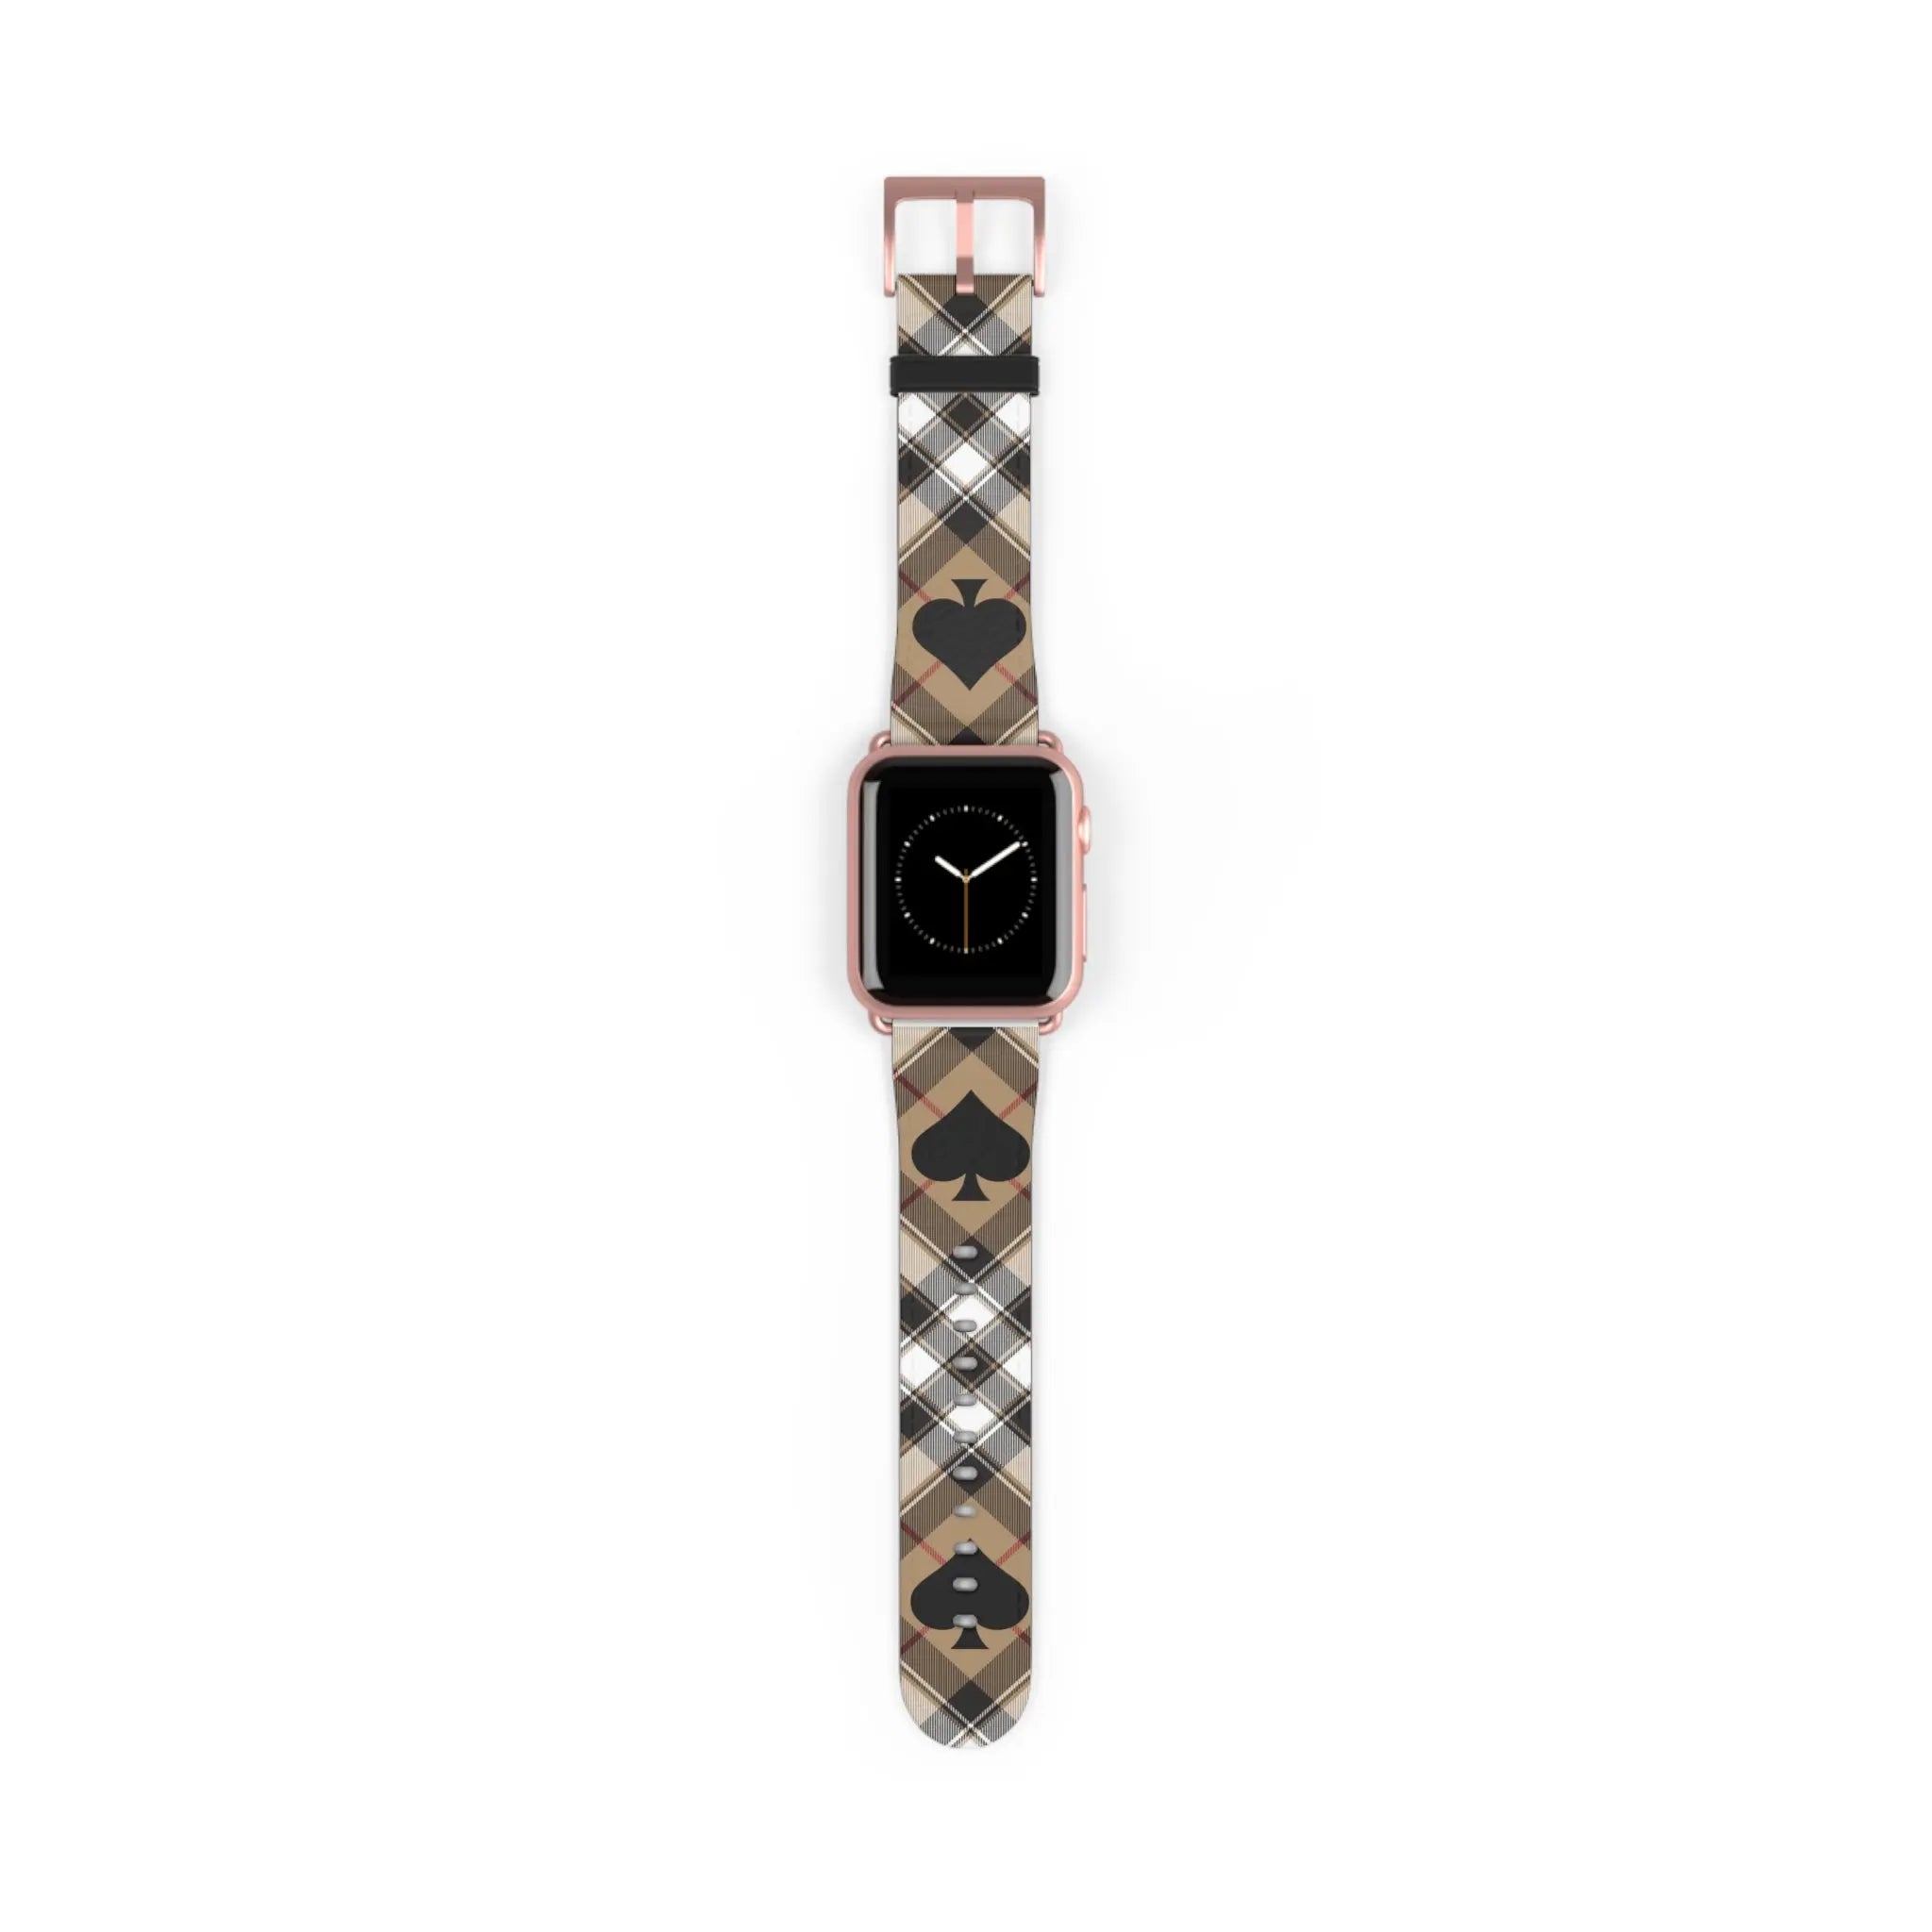  Abby Beige Ace of Spades Apple Watch Band Accessories38-41mmRoseGoldMatte